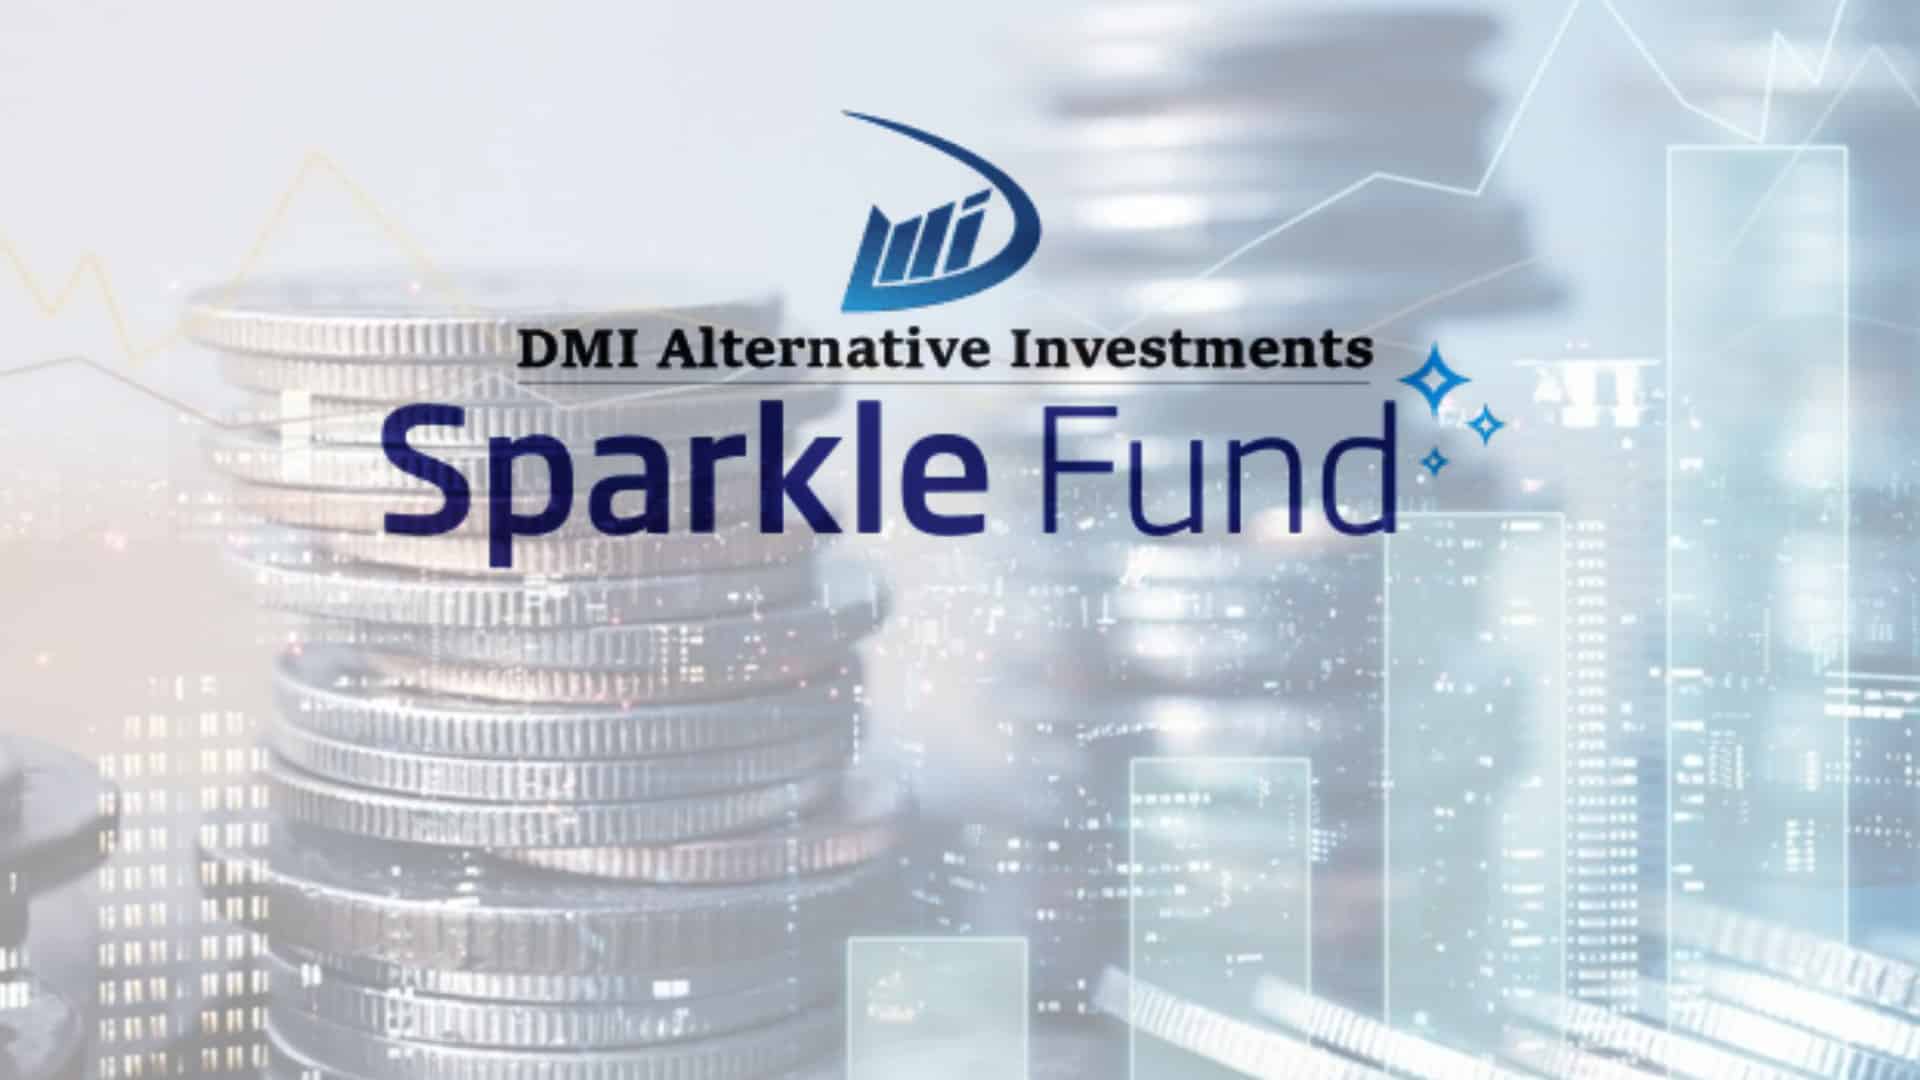 DMI Alternatives raises $40mn for Sparkle Fund